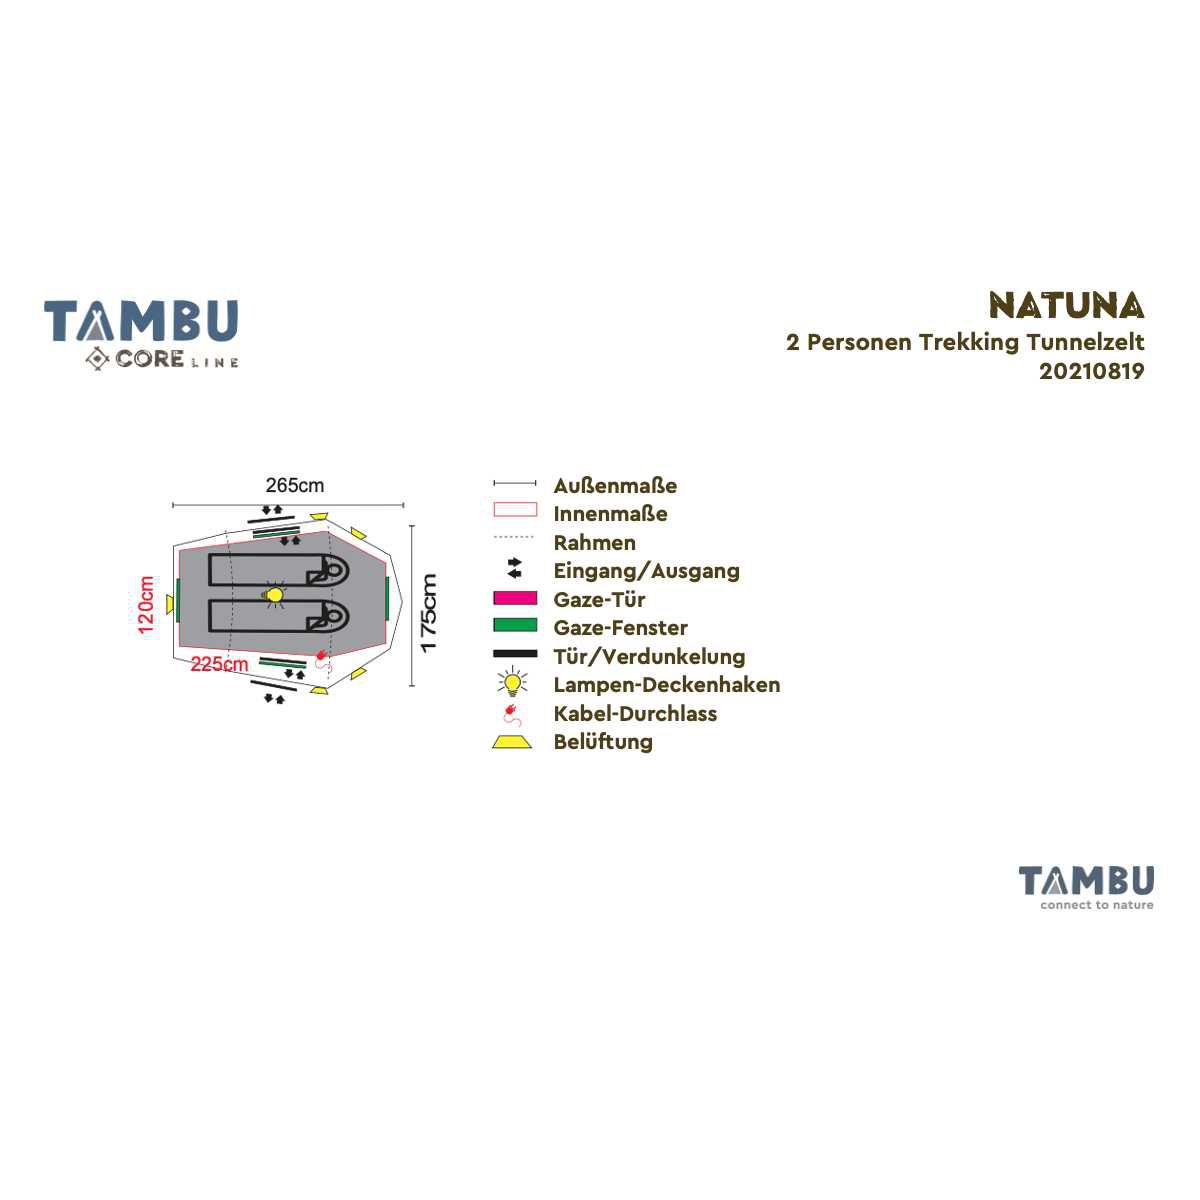 TAMBU NATUNA Trekking Tunnelzelt Beige 2 Personen - 20210819